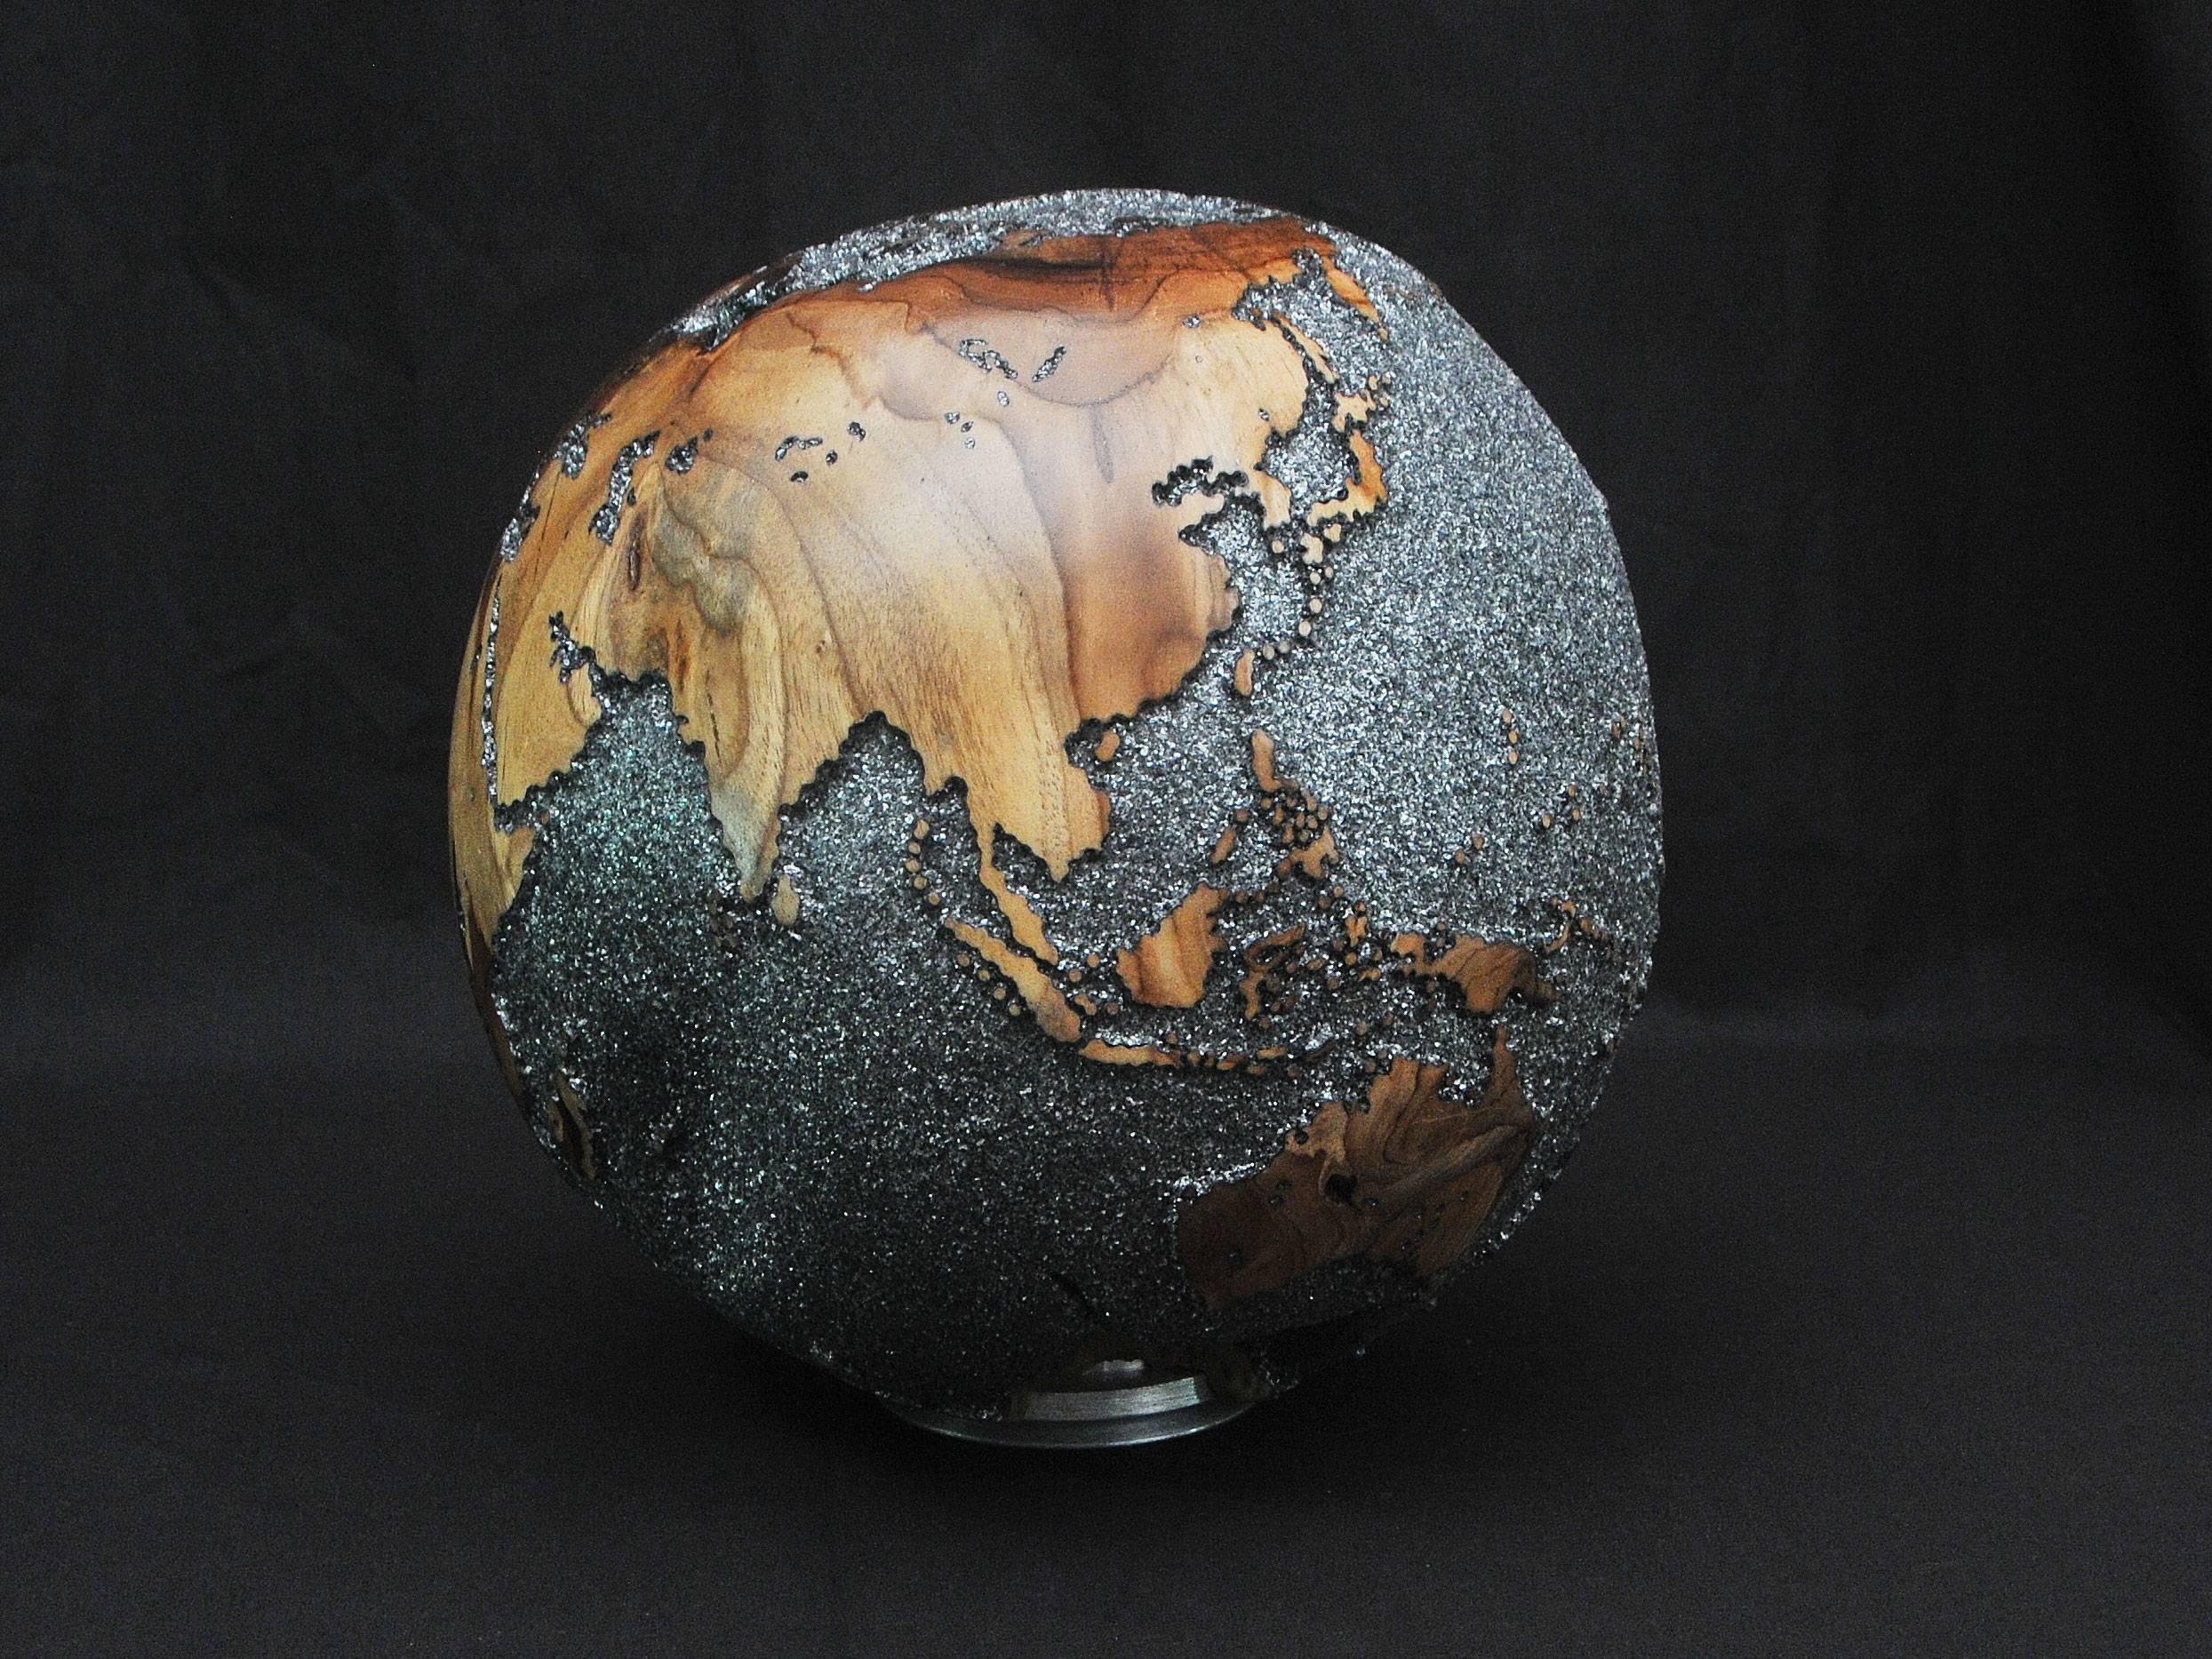 Organic Modern One of a kind Teak Root Globe in Black Mica with Rotative Base - 9.84 in/25 cm